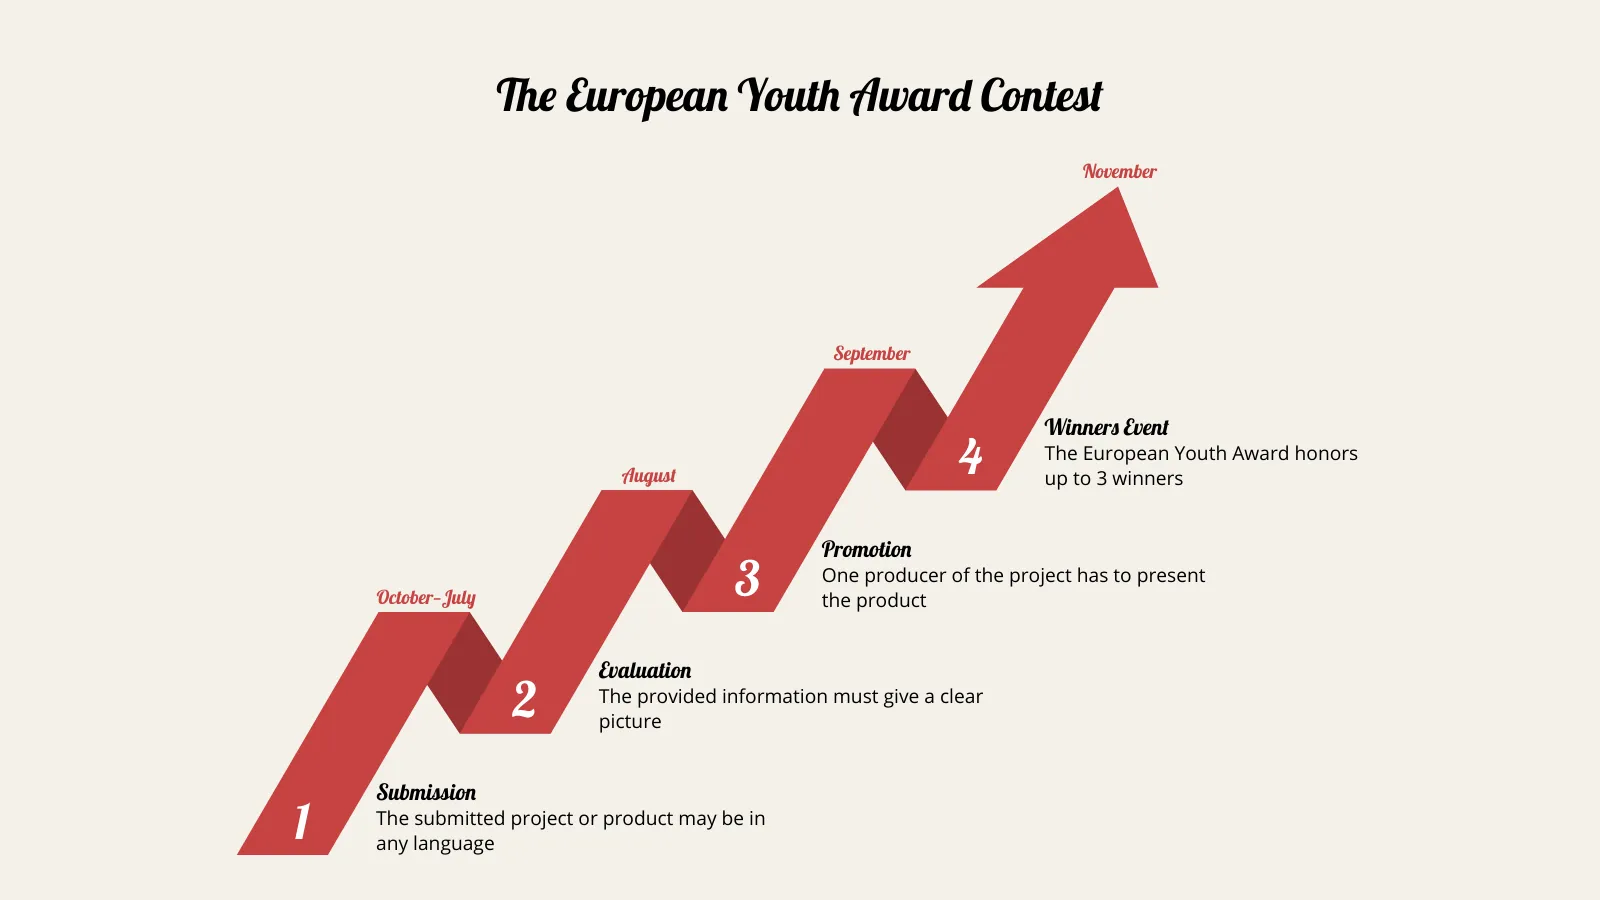 Milestones as Arrow example: The European Youth Award Contest